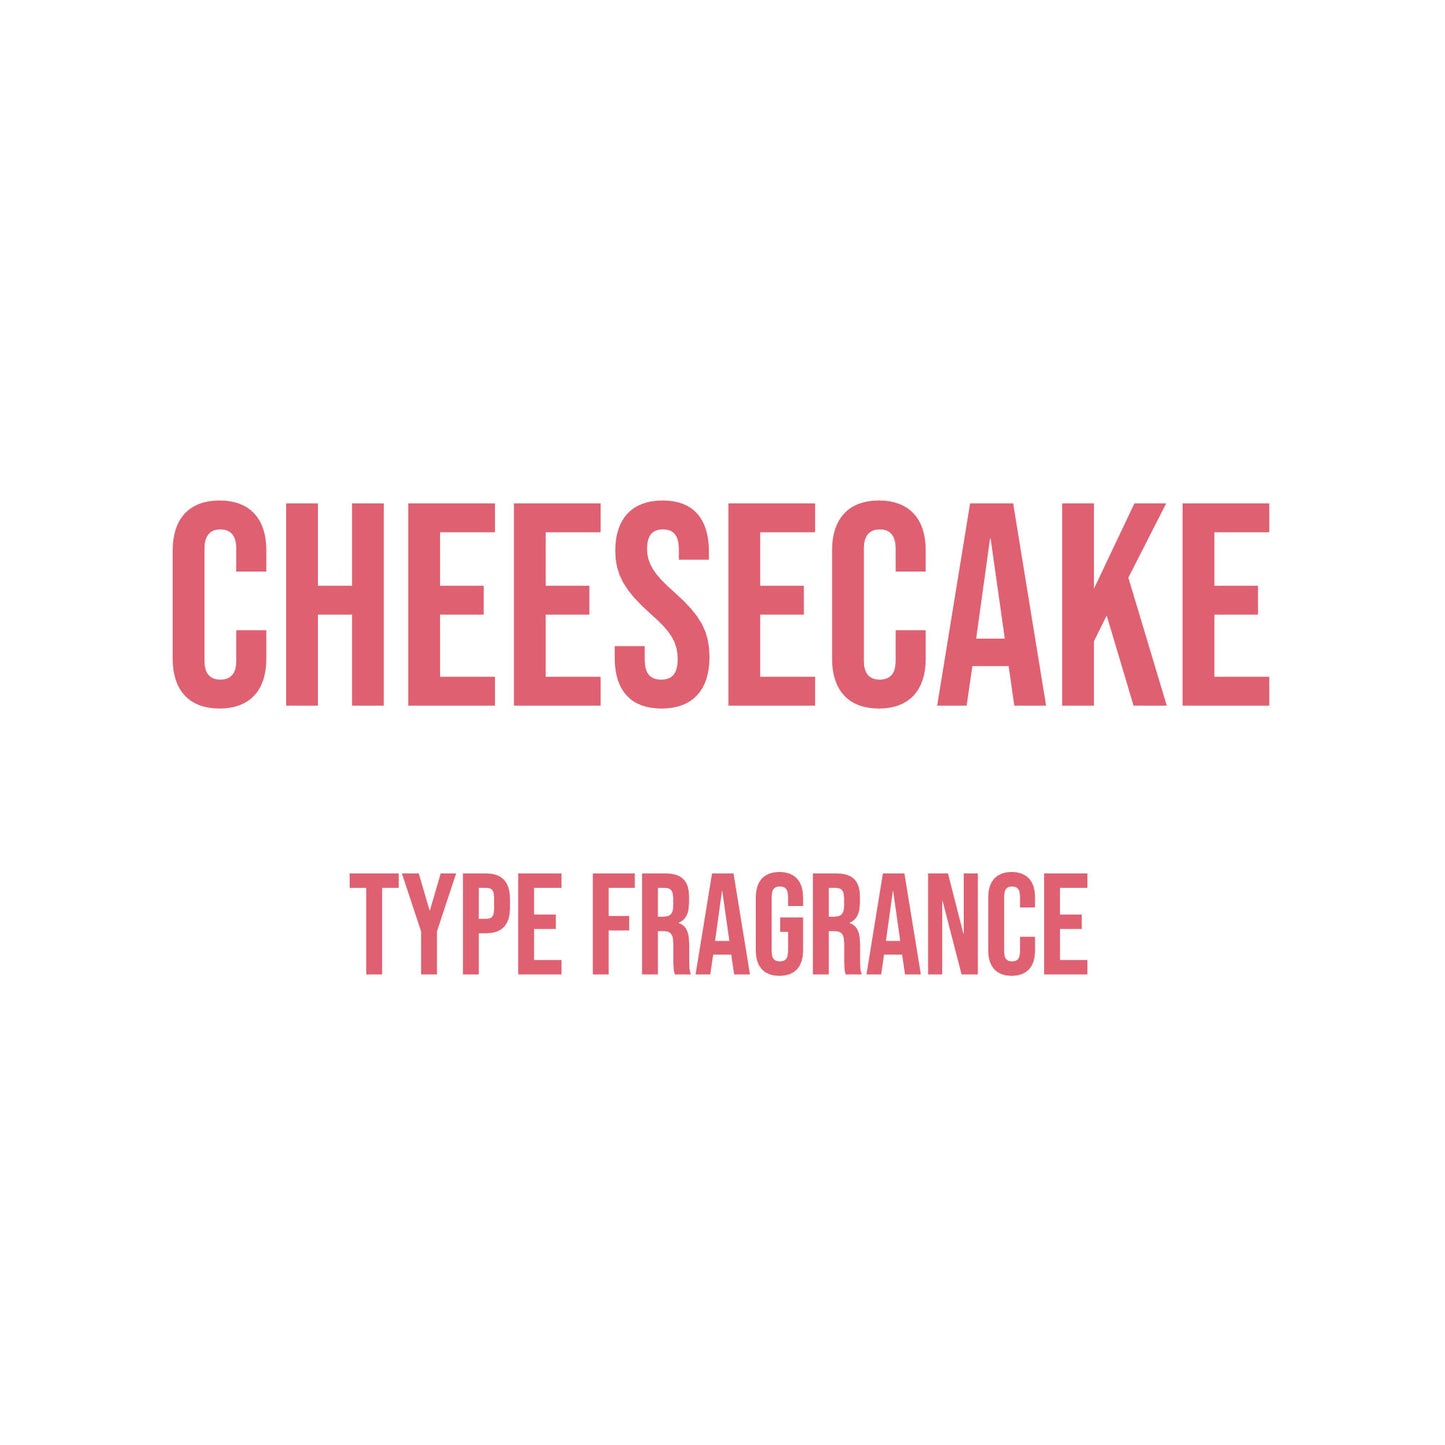 Cheesecake Type Fragrance